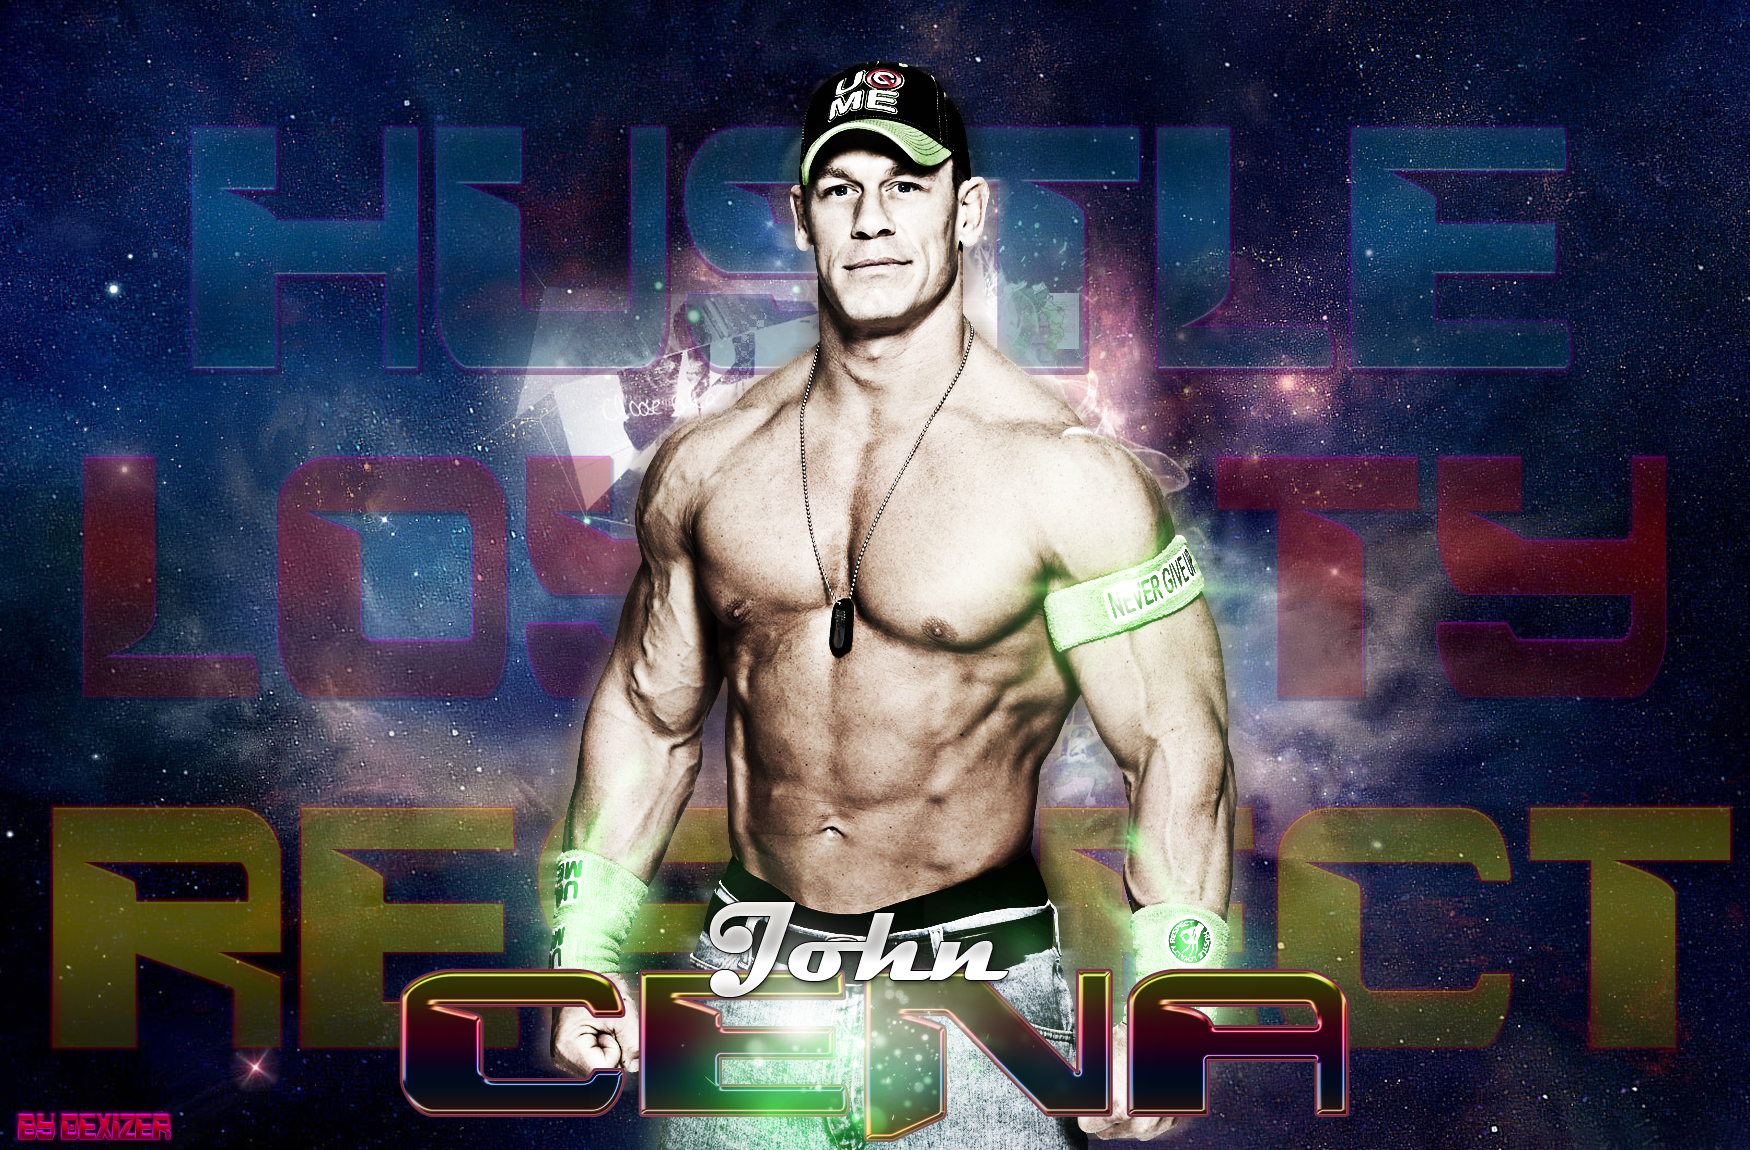 New WWE John Cena 2014 green neon wallpaper by SmileDexizeR on